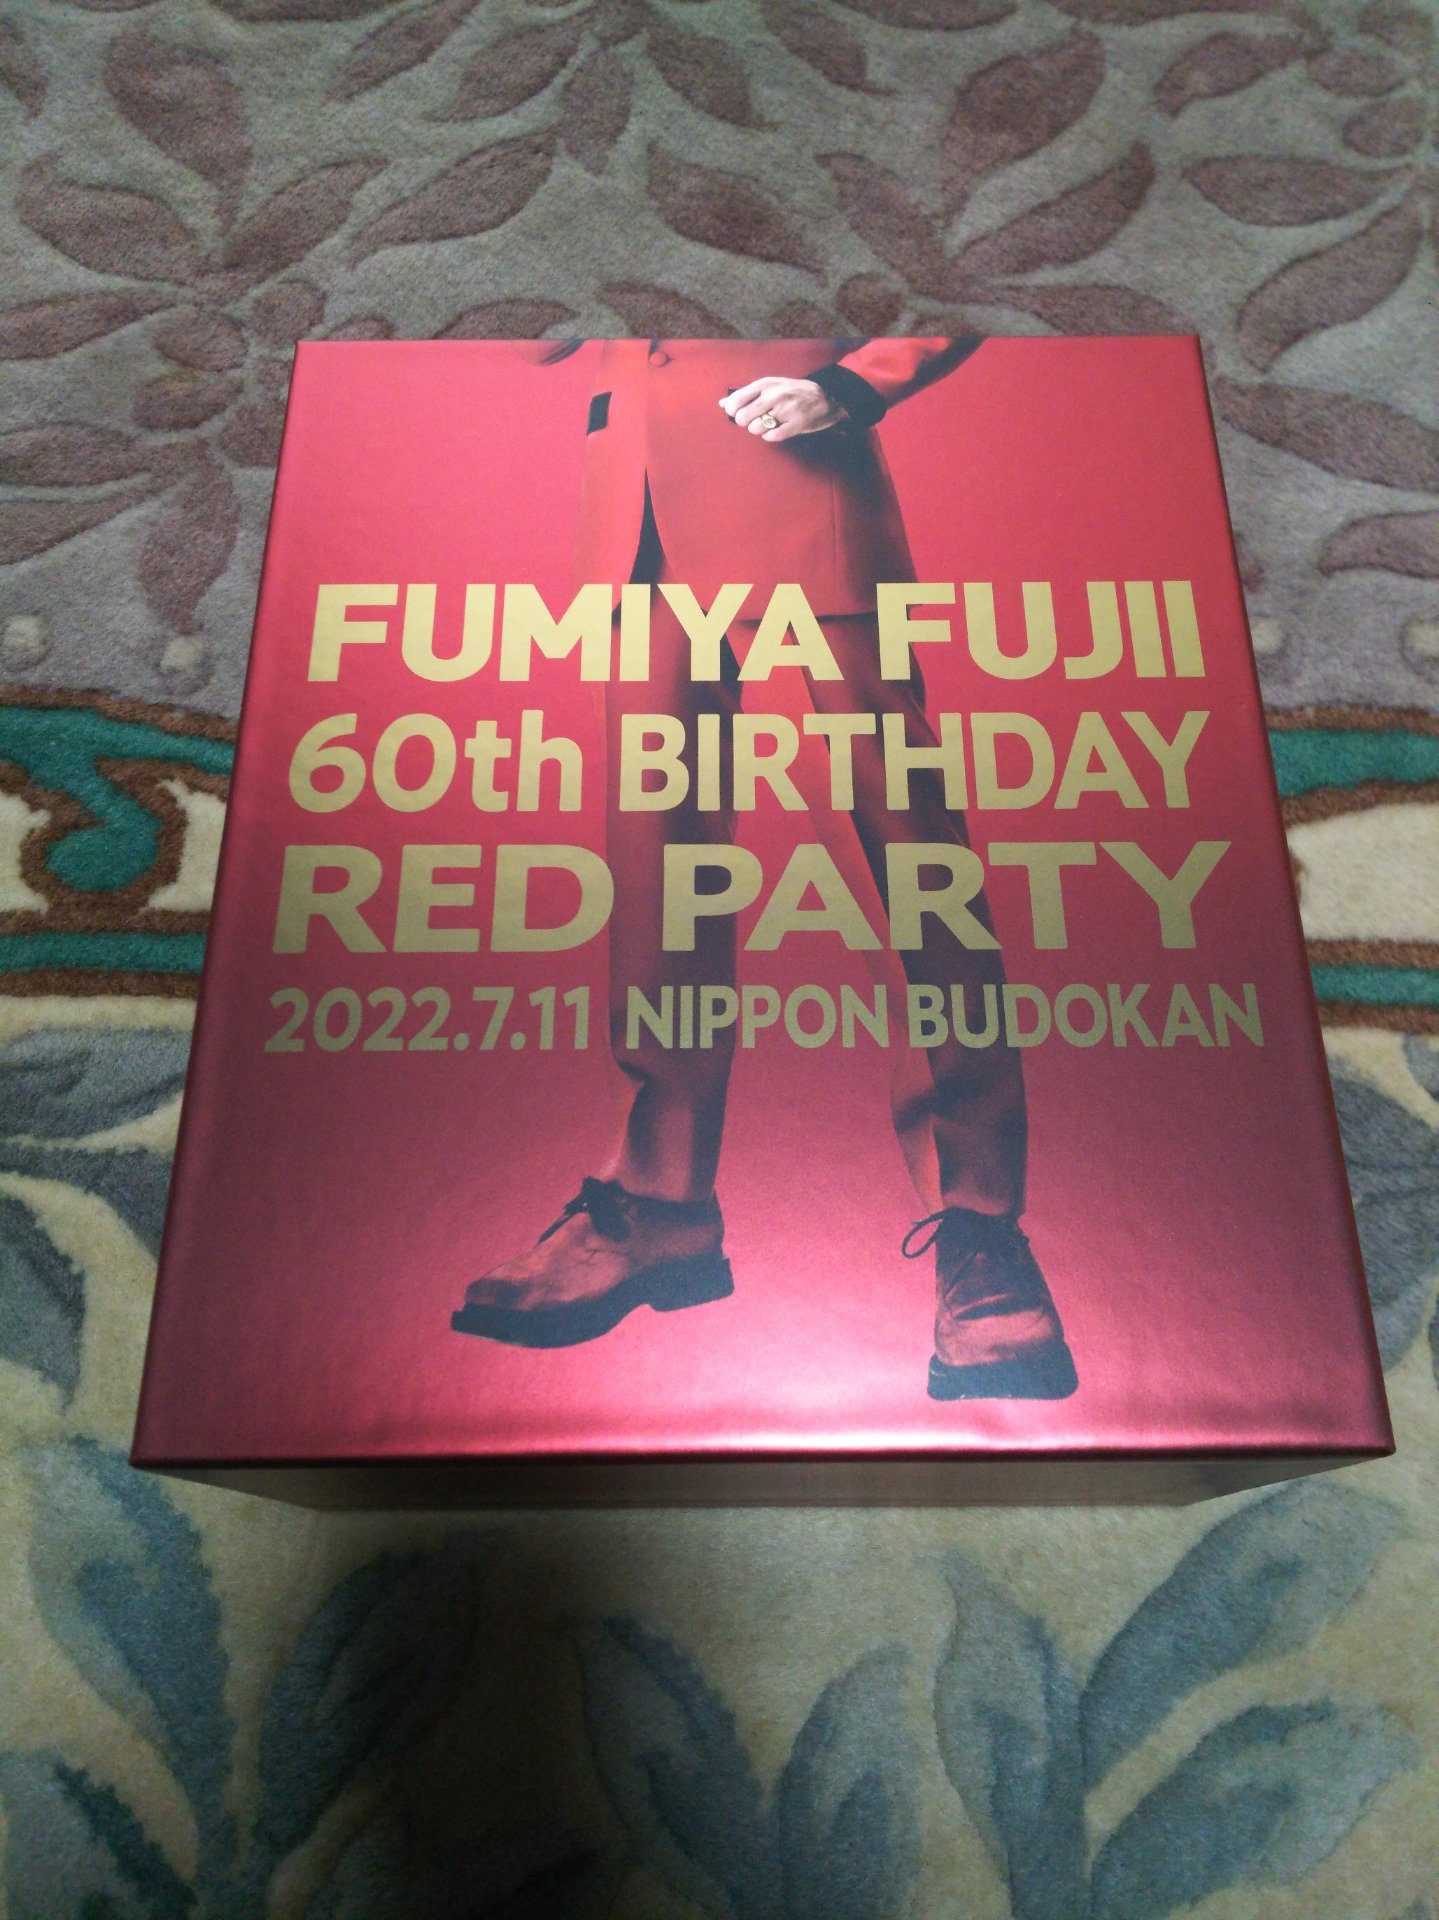 Blu-藤井フミヤ RED PARTY Blu-ray - ミュージック